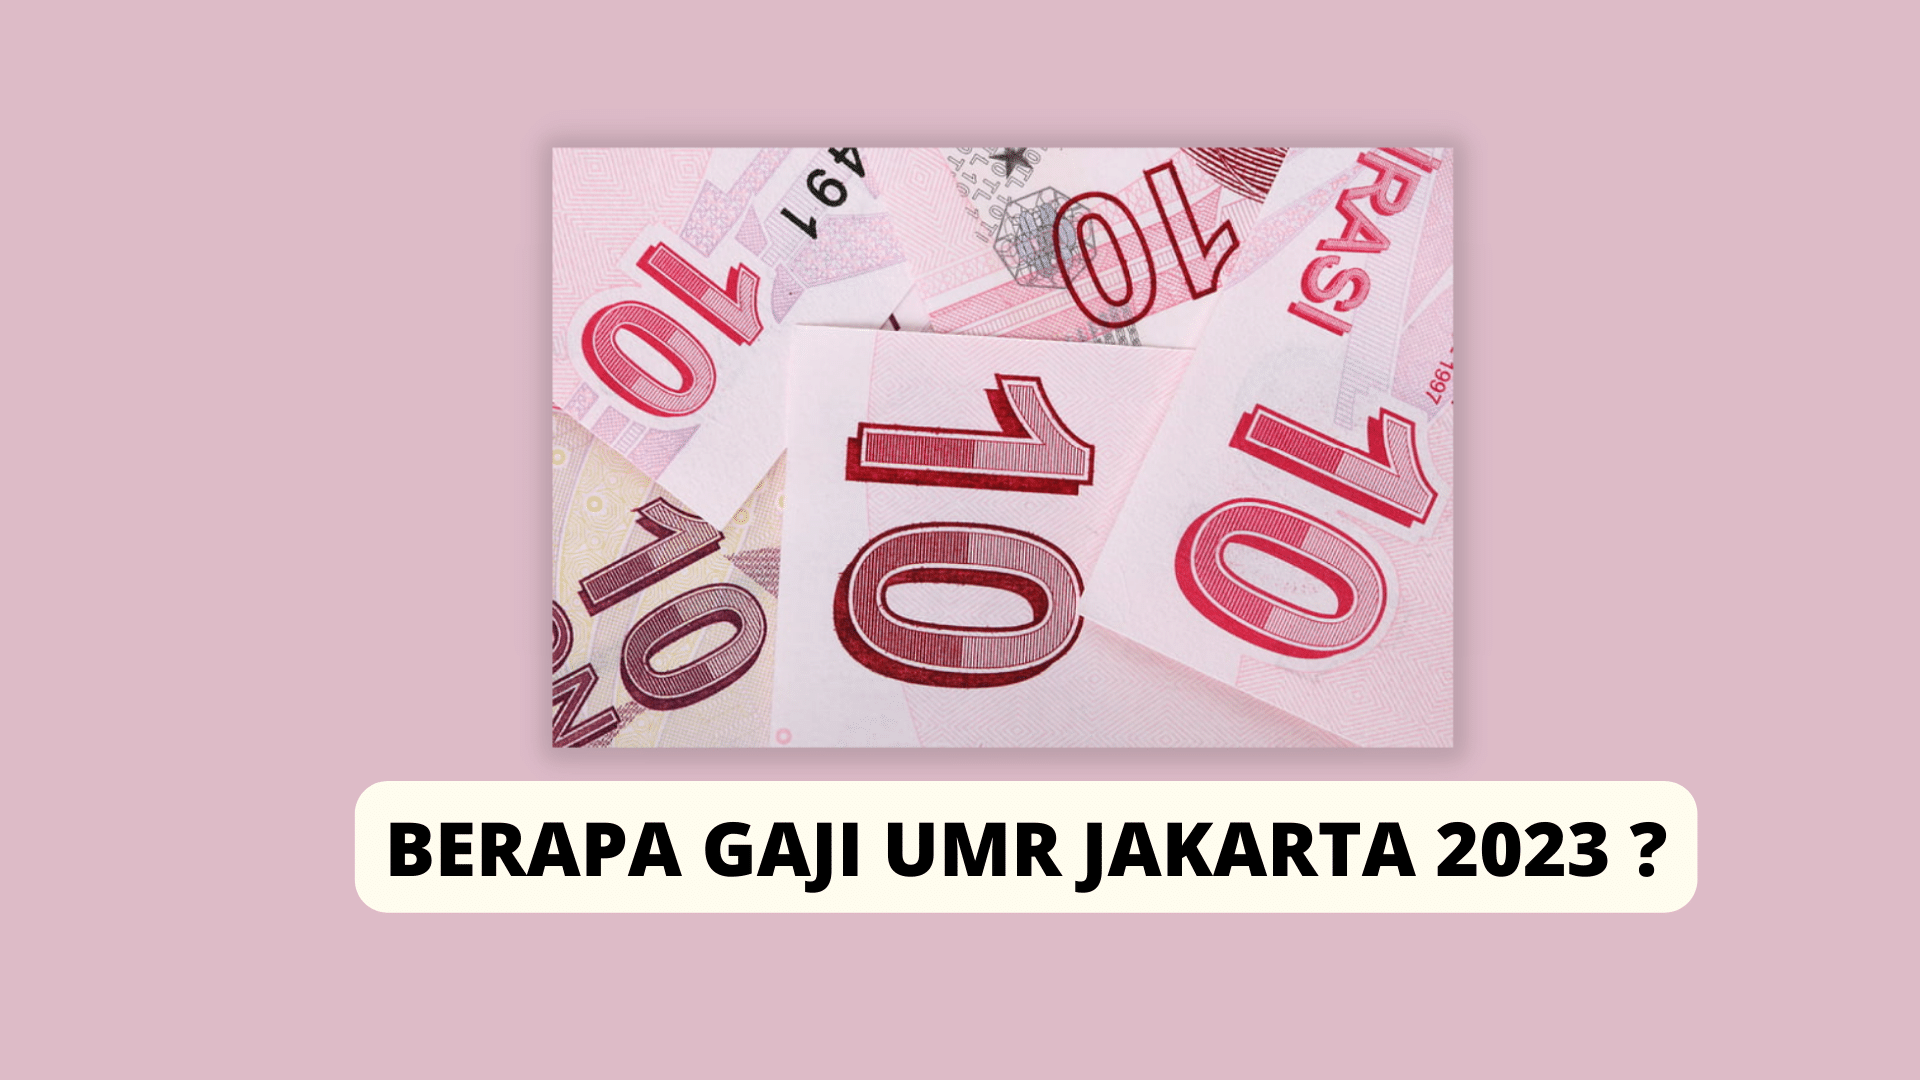 Daftar Lengkap Gaji UMR Jakarta 2023 dan Jabodetabek